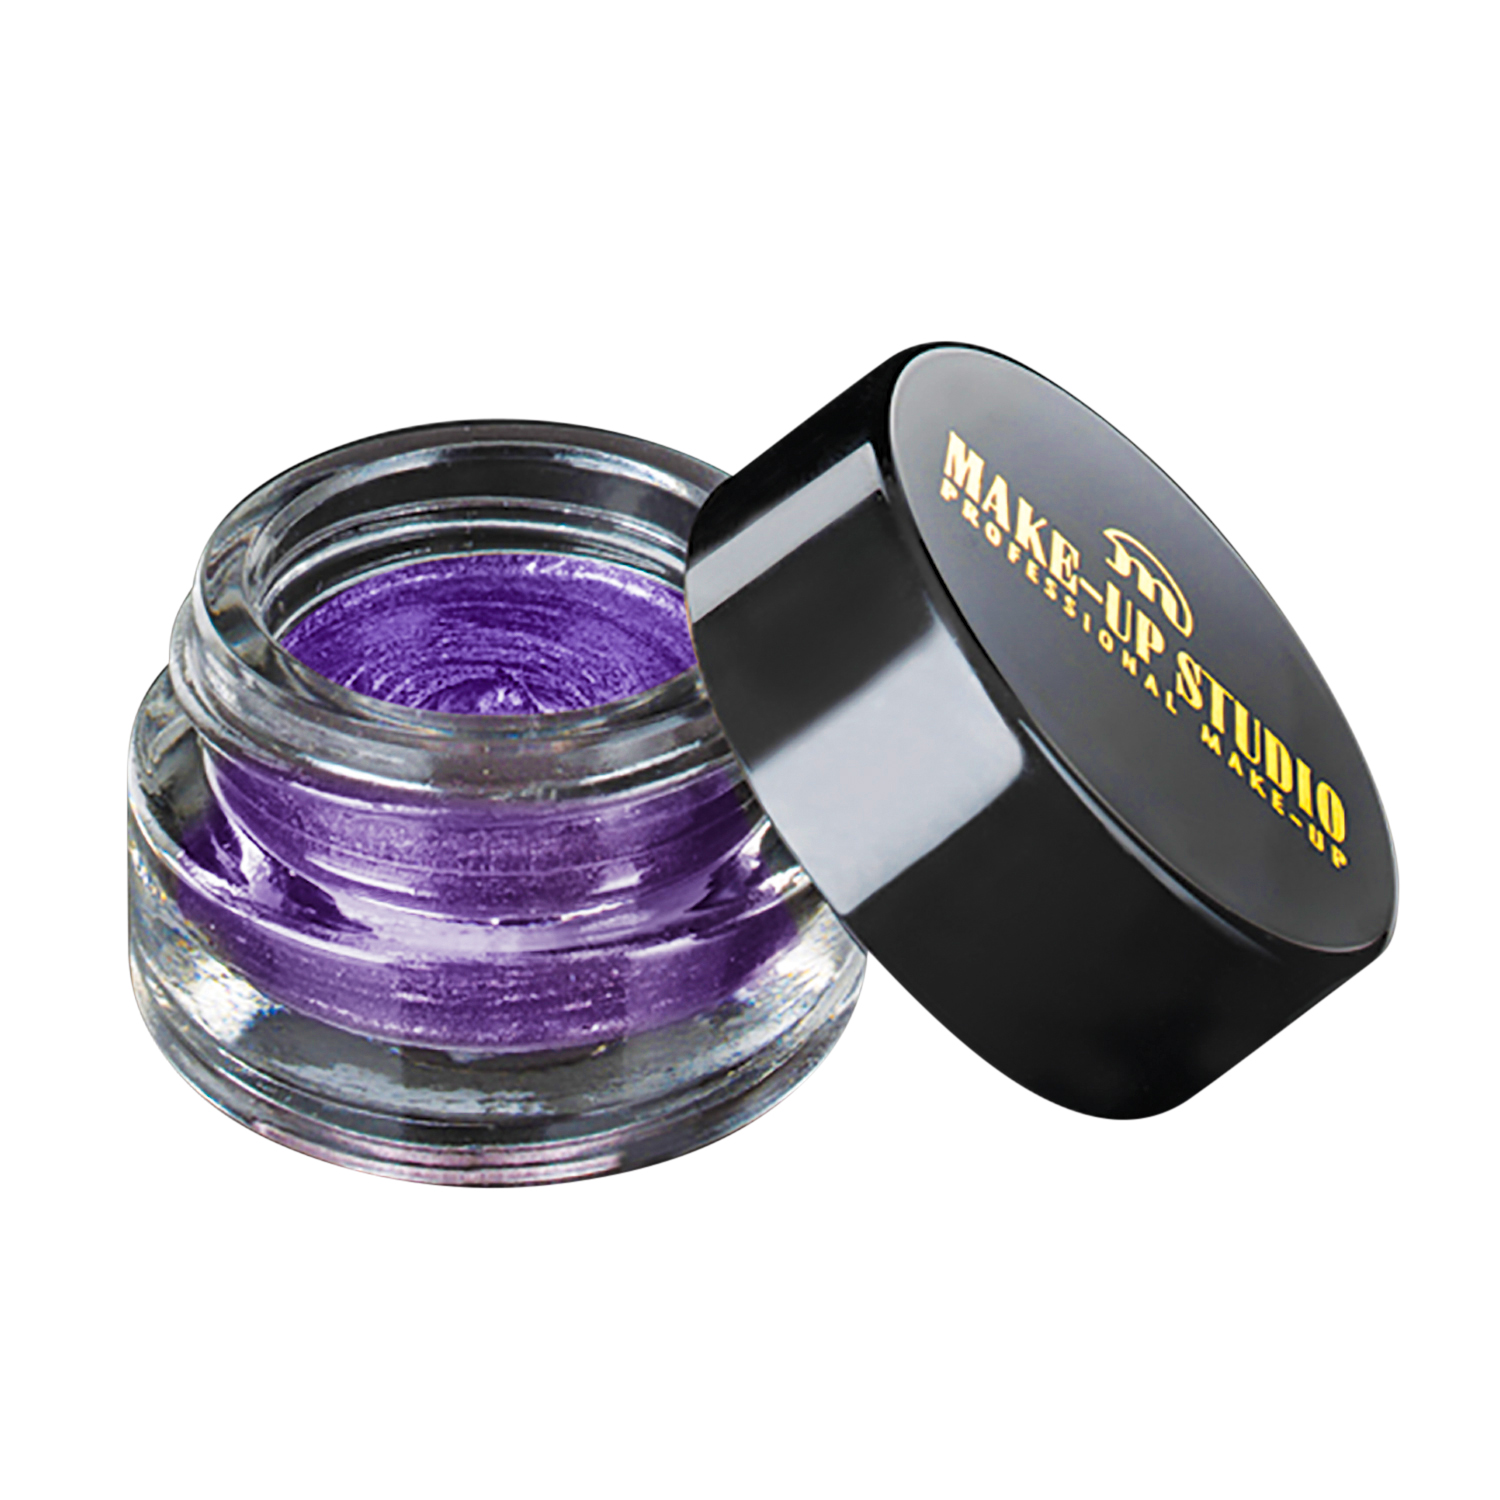 Make-up Studio Durable Eyeshadow Mousse Oogschaduw - Violet Vanity